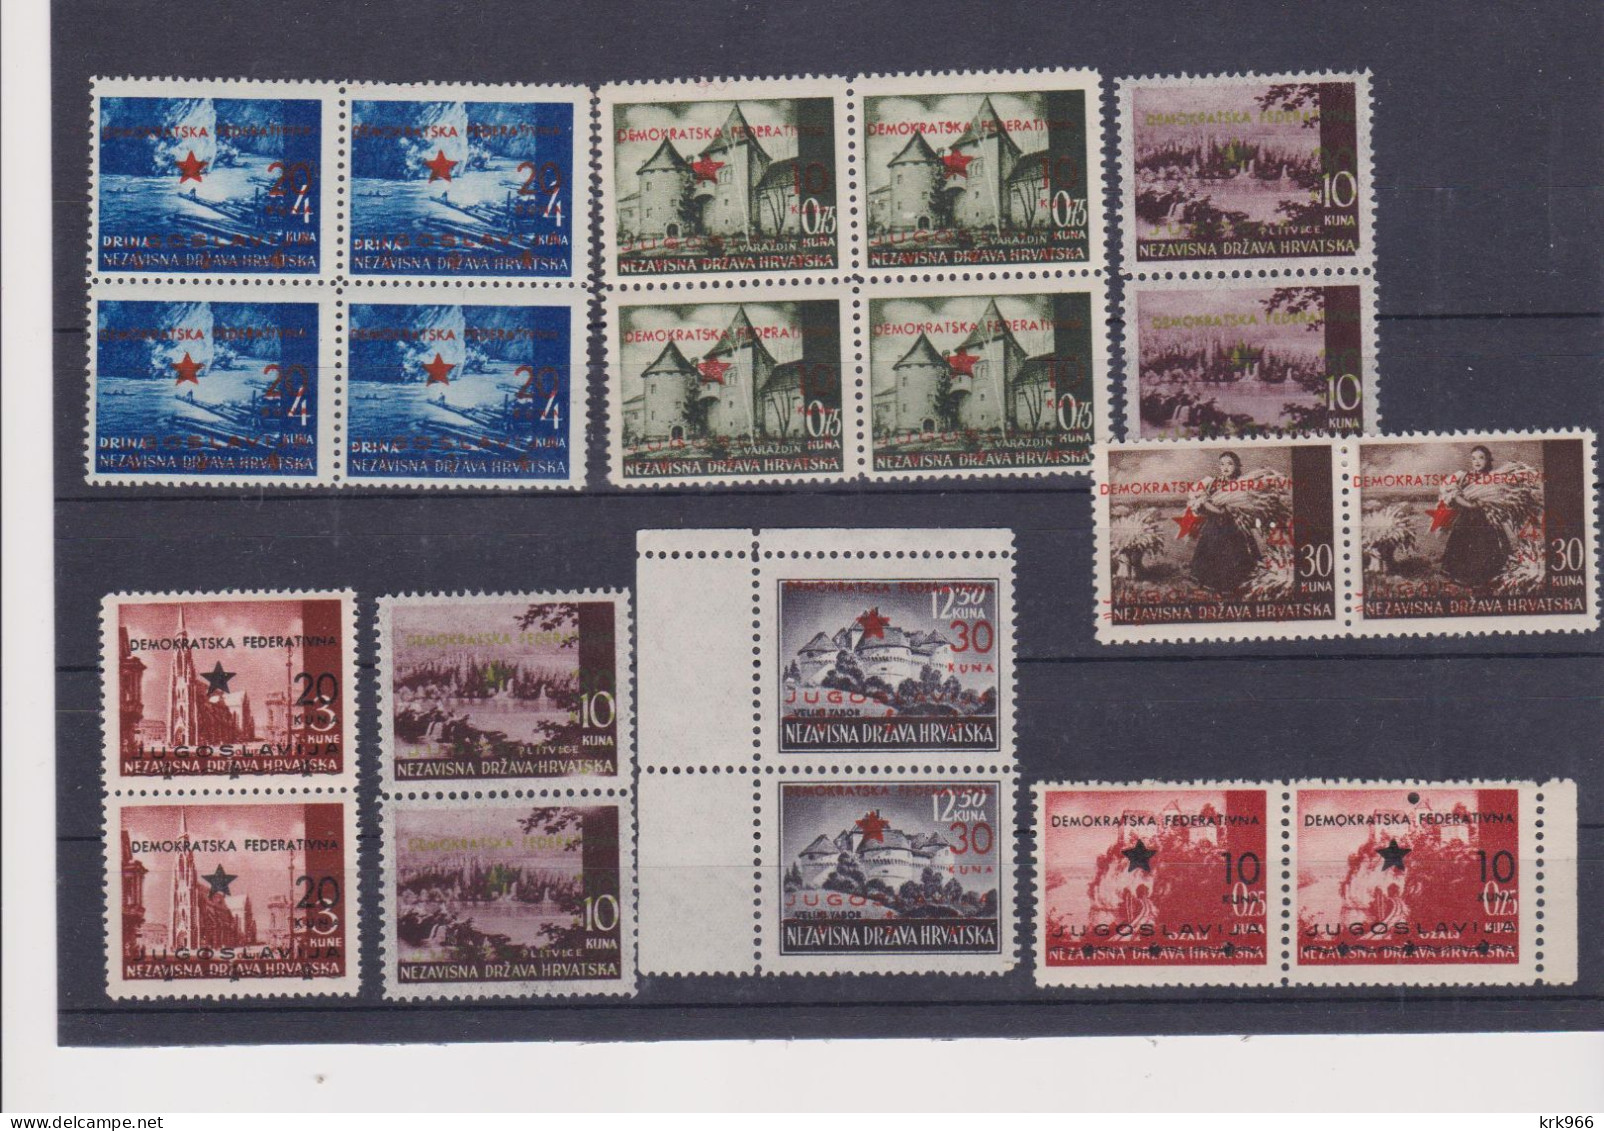 YUGOSLAVIA,1945 CROATIA SPLIT ISSUE Stamps Lot MNH - Nuovi